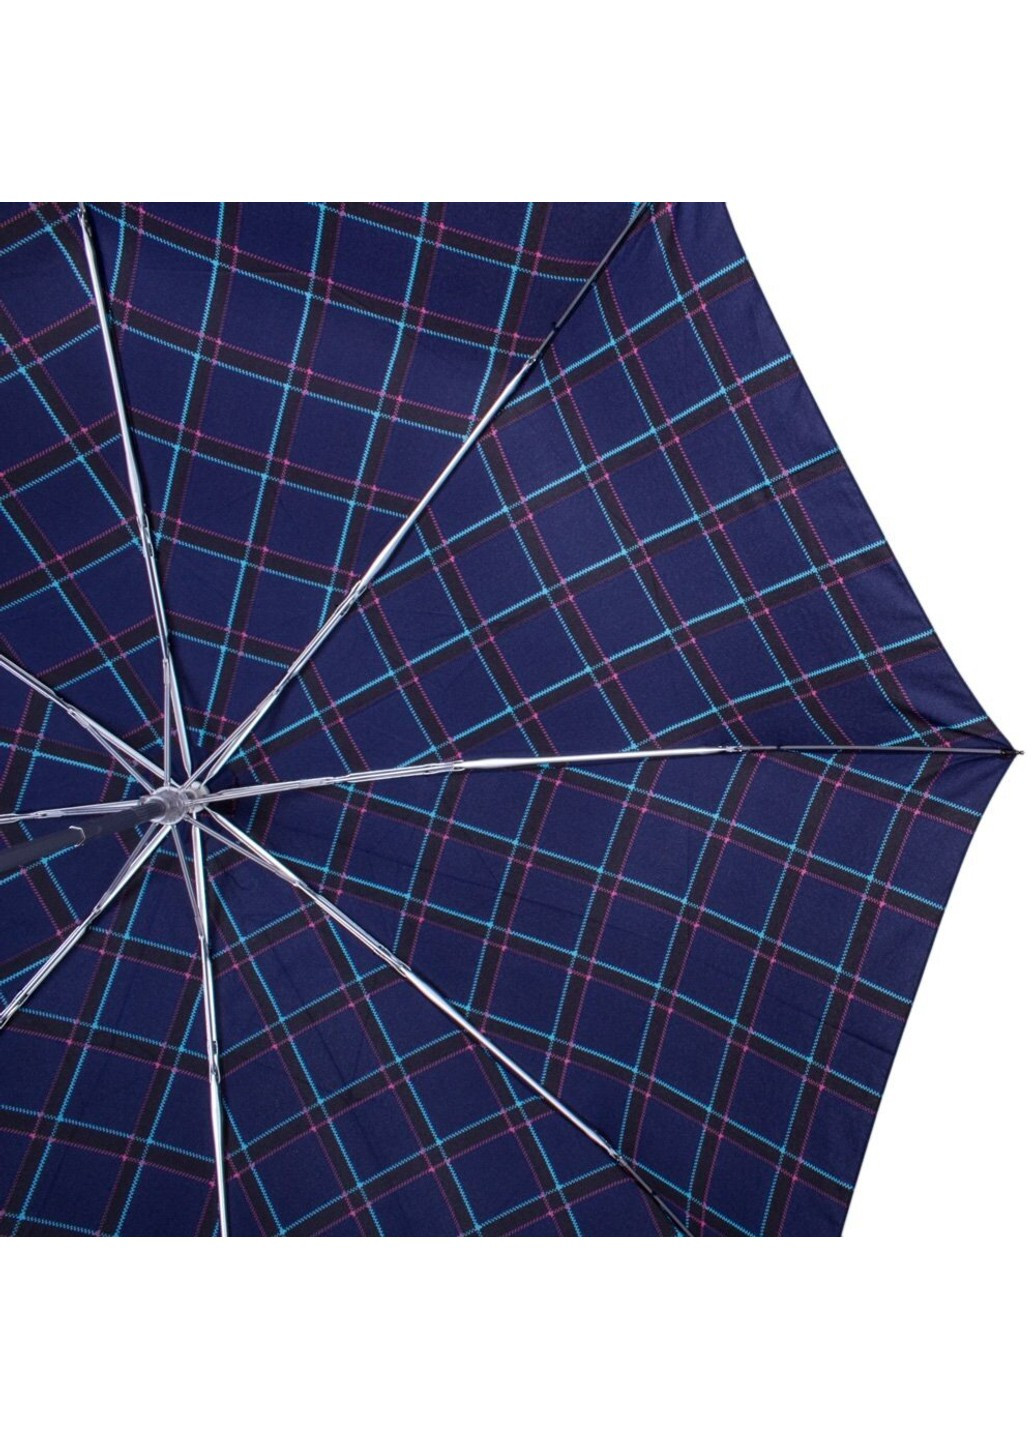 Жіноча компактна механічна парасолька u42659-8 Happy Rain (262976706)